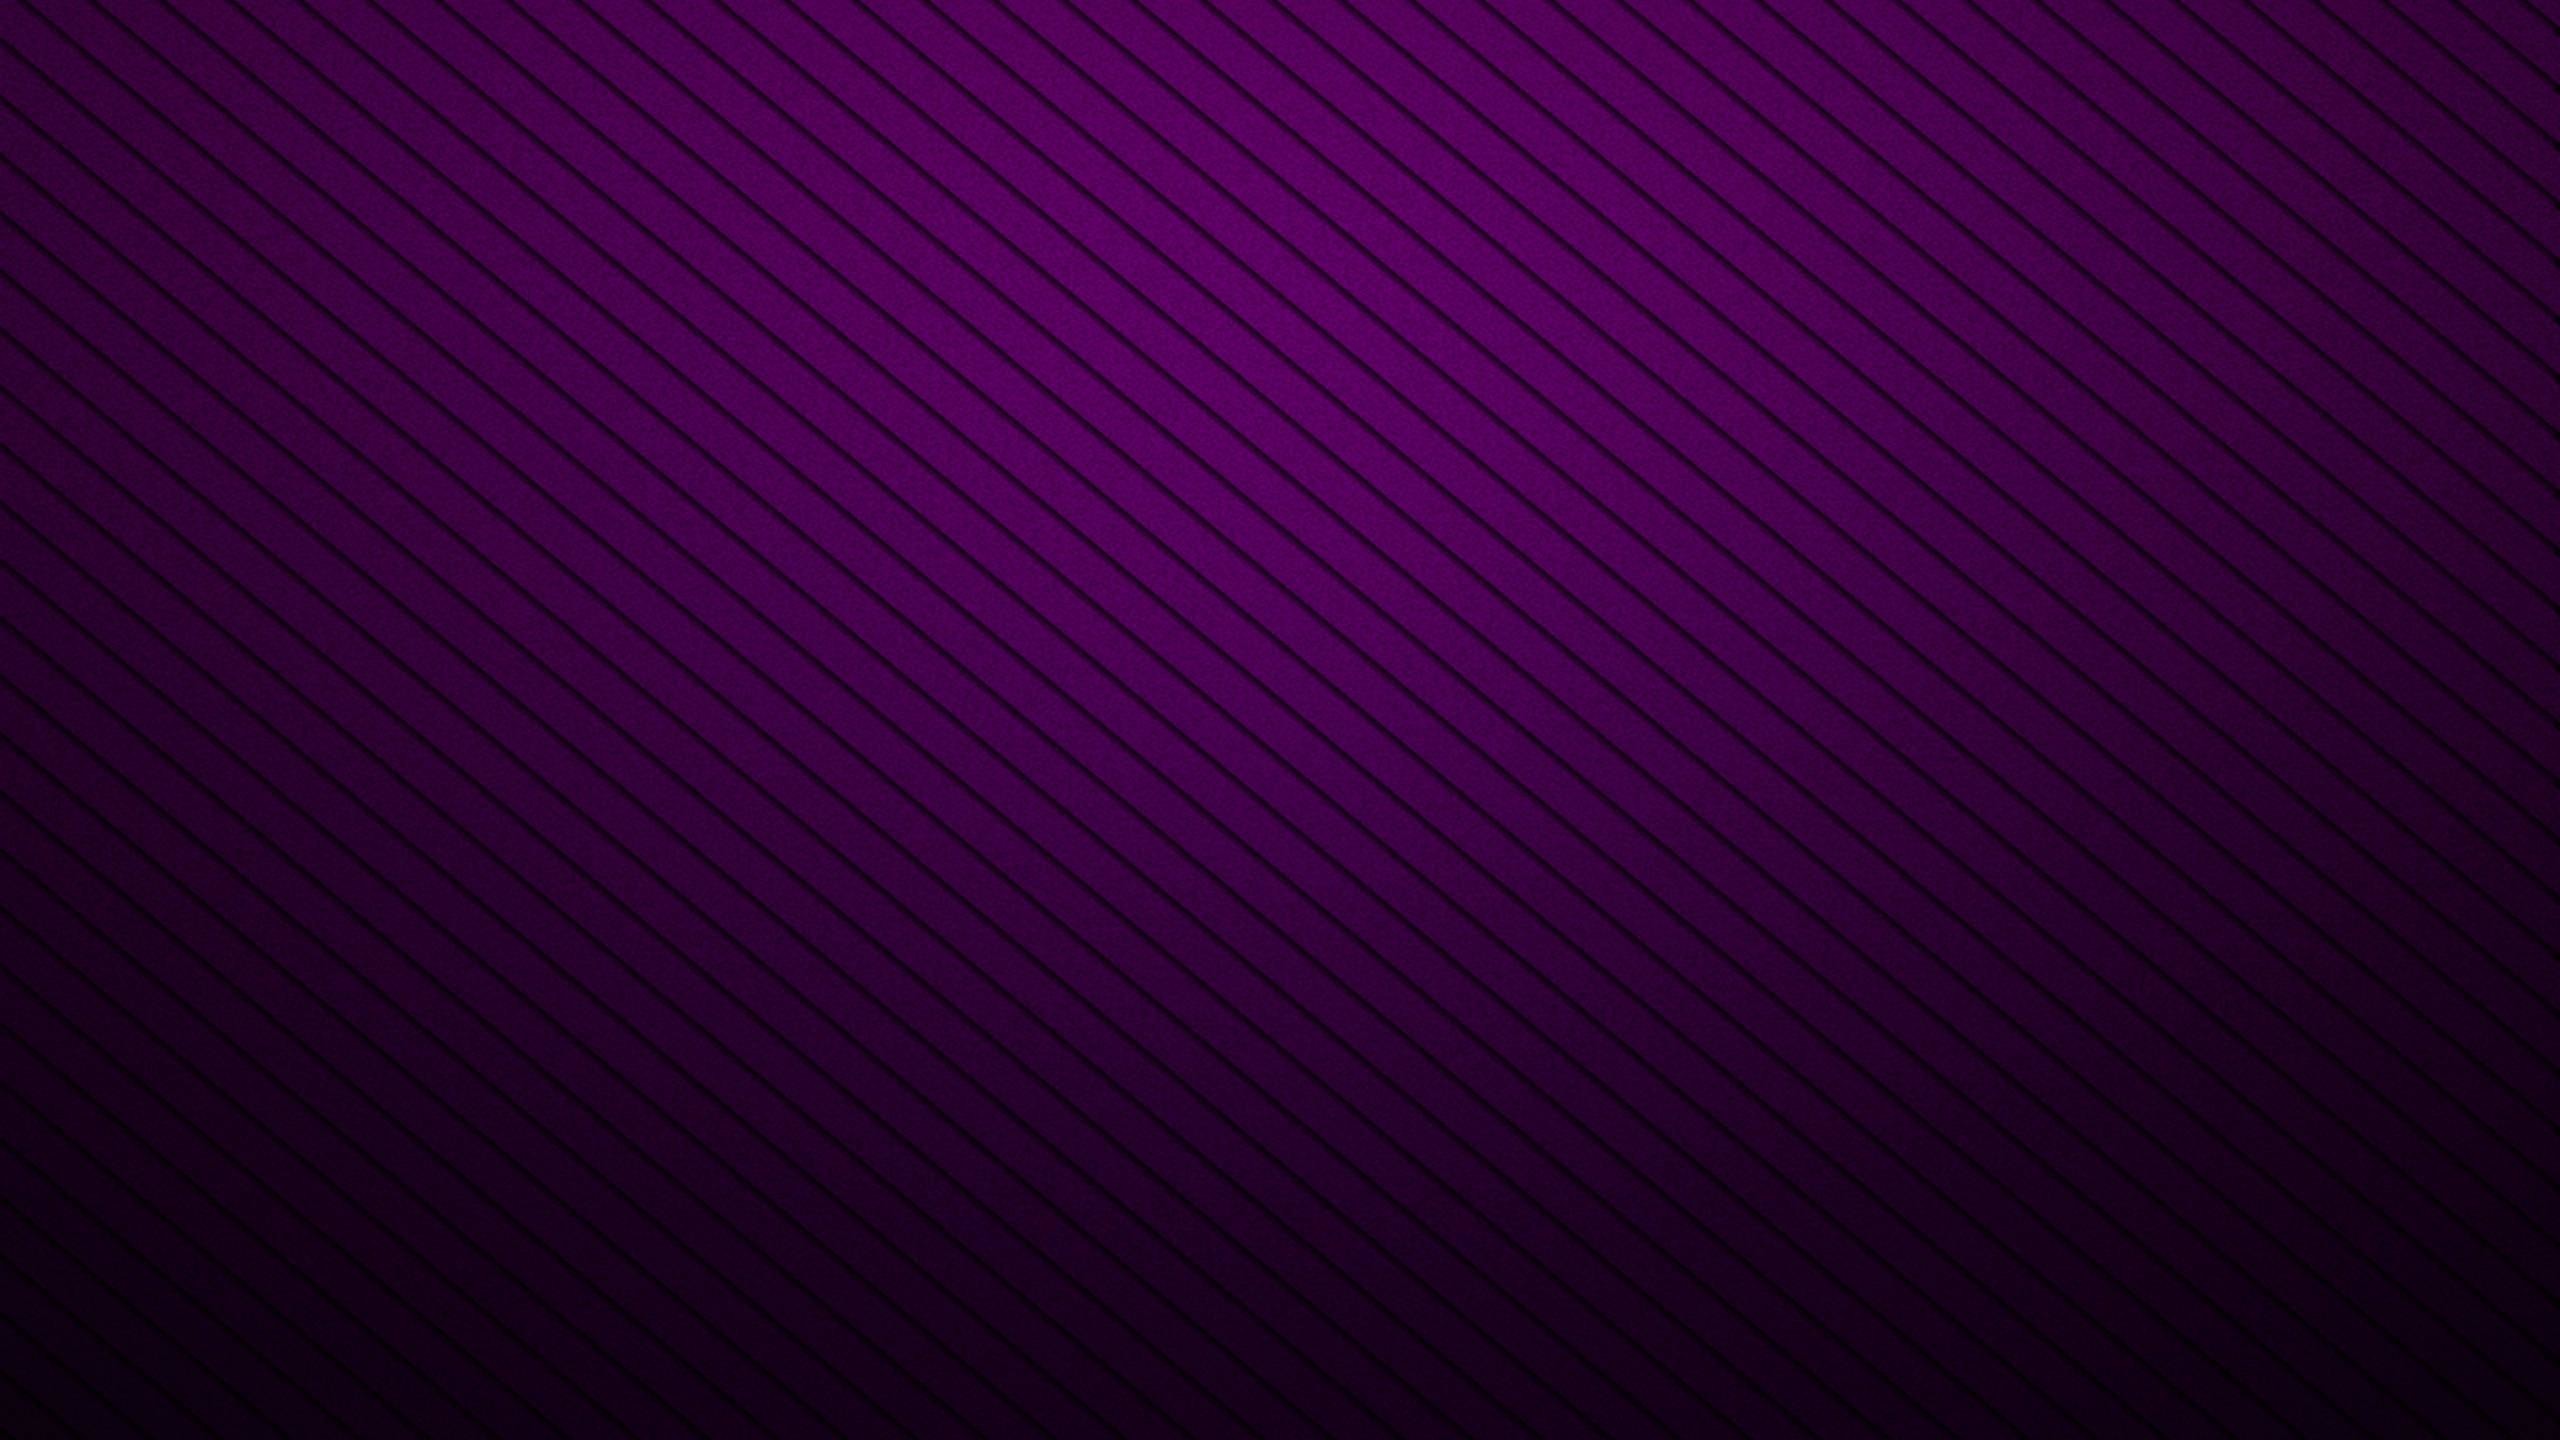 2560x1440 Purple And Black Wallpaper - Desktop Backgrounds